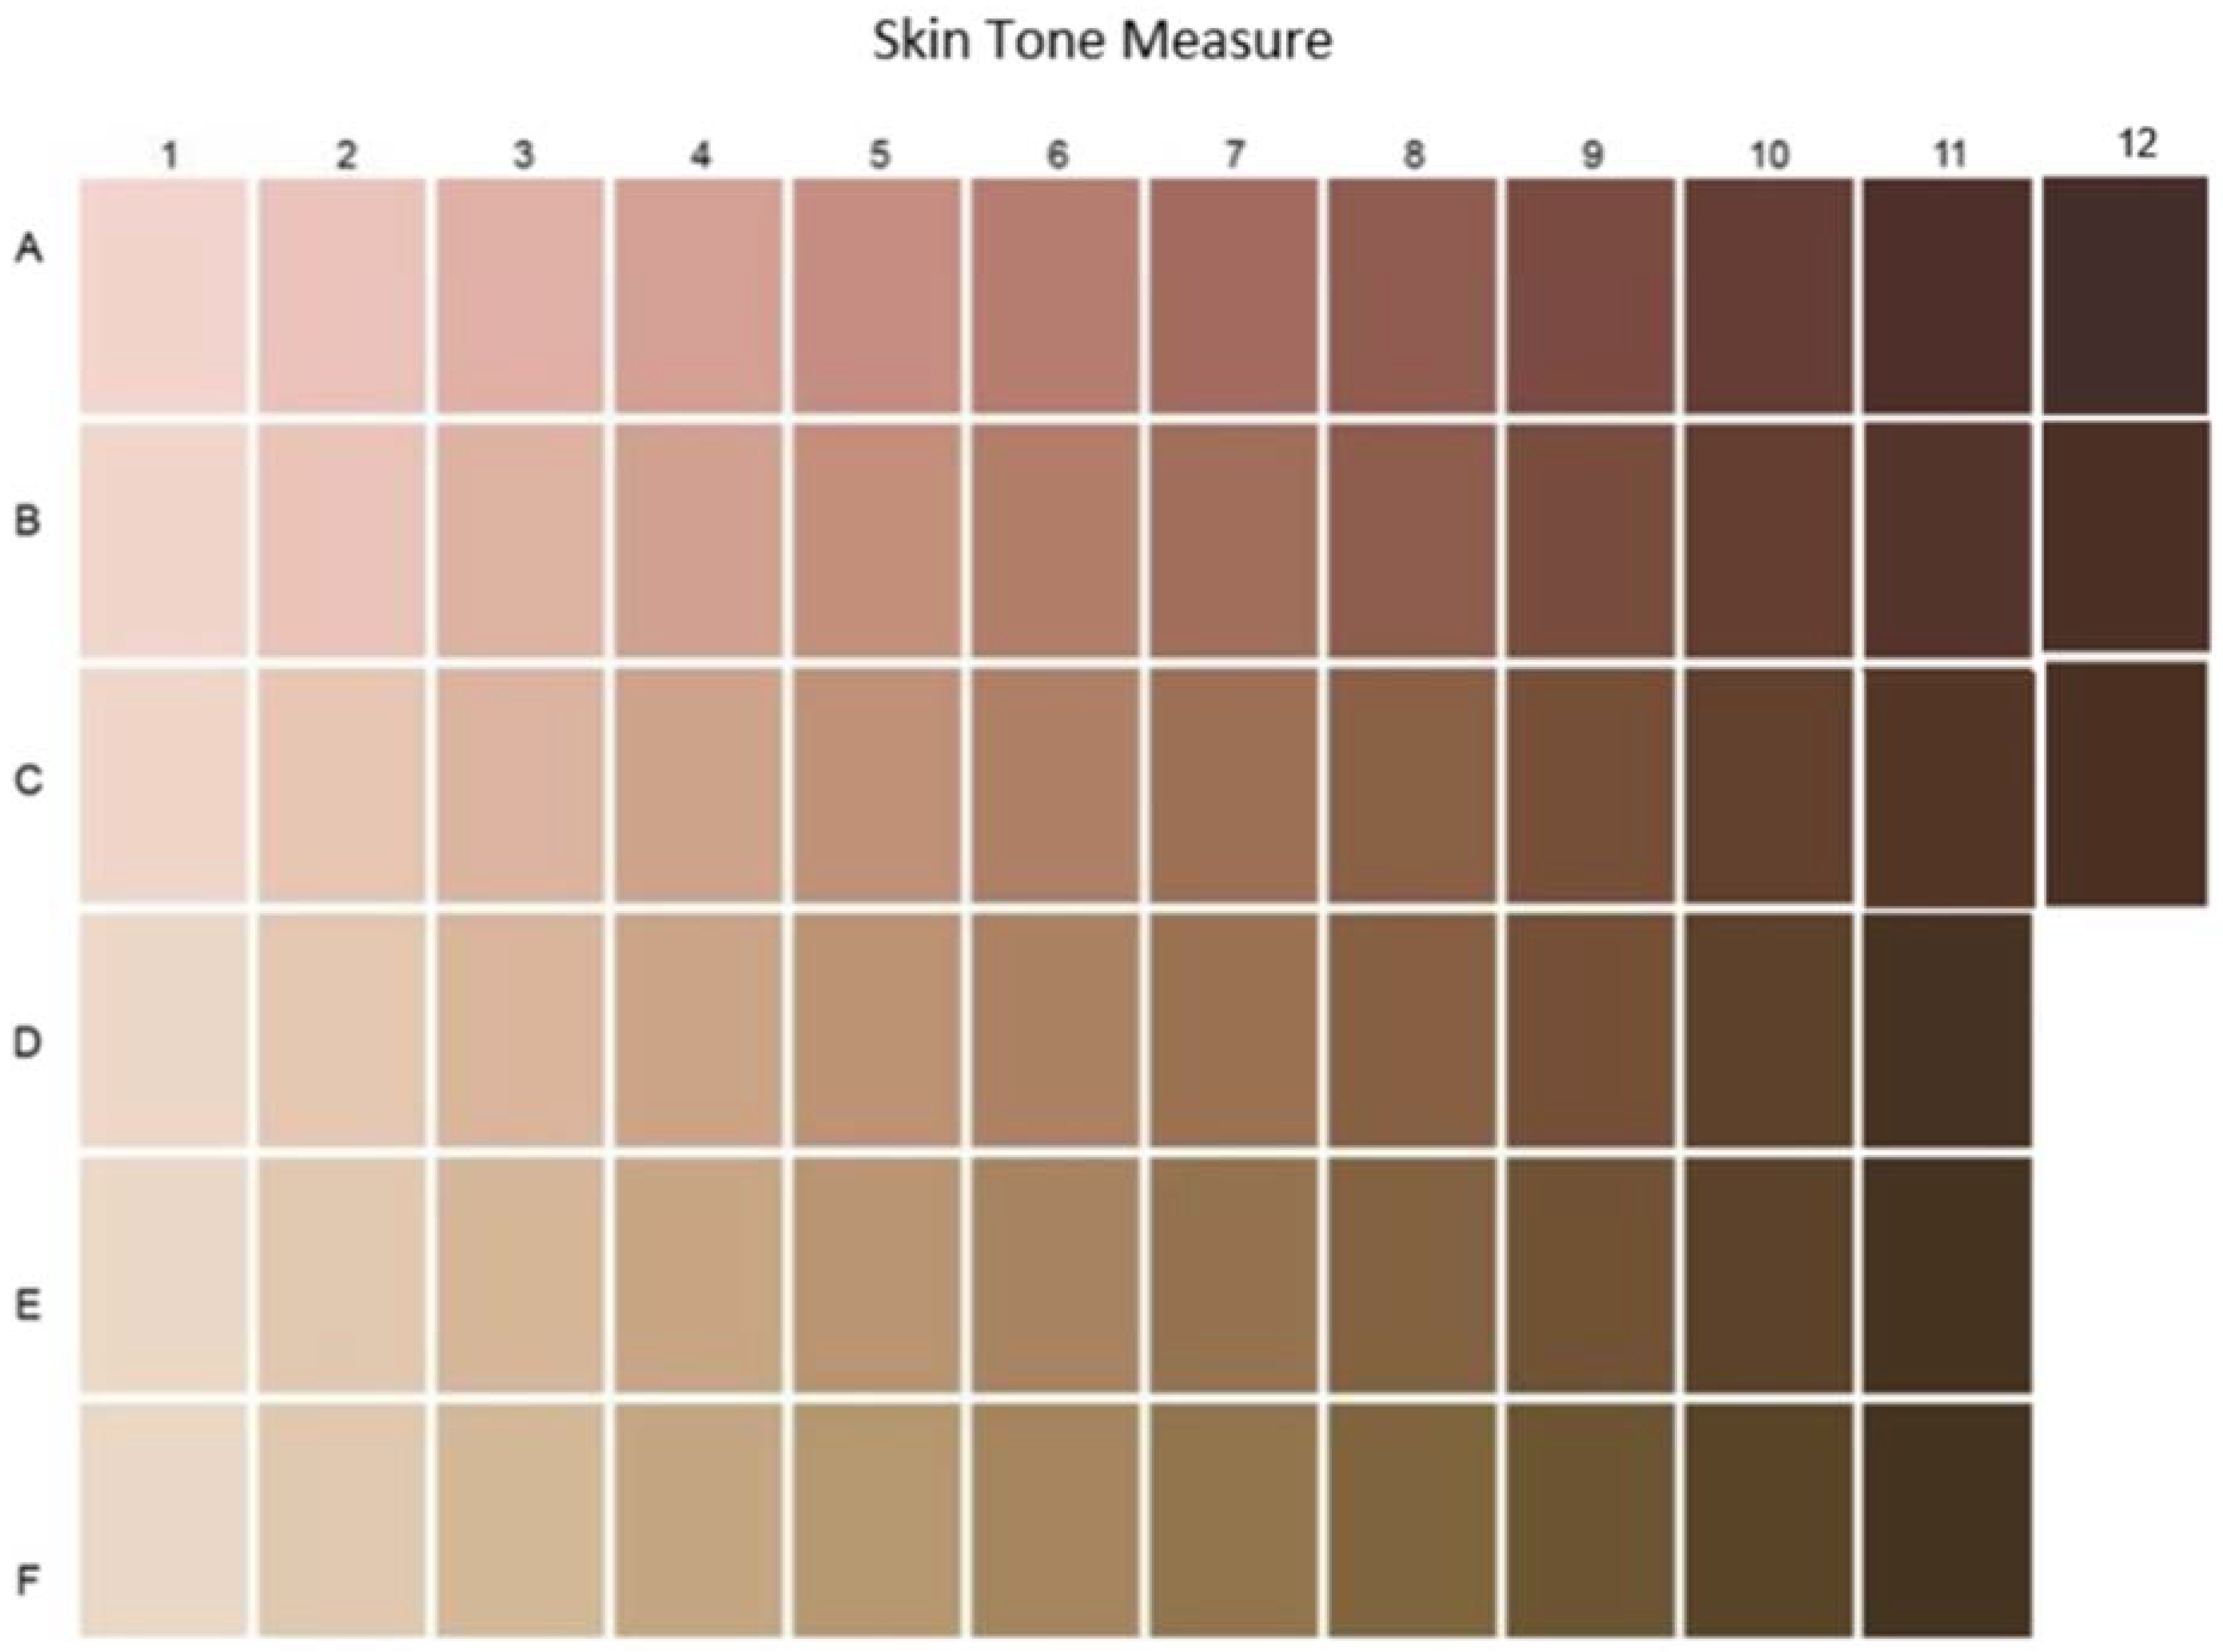 different skin tones of black people